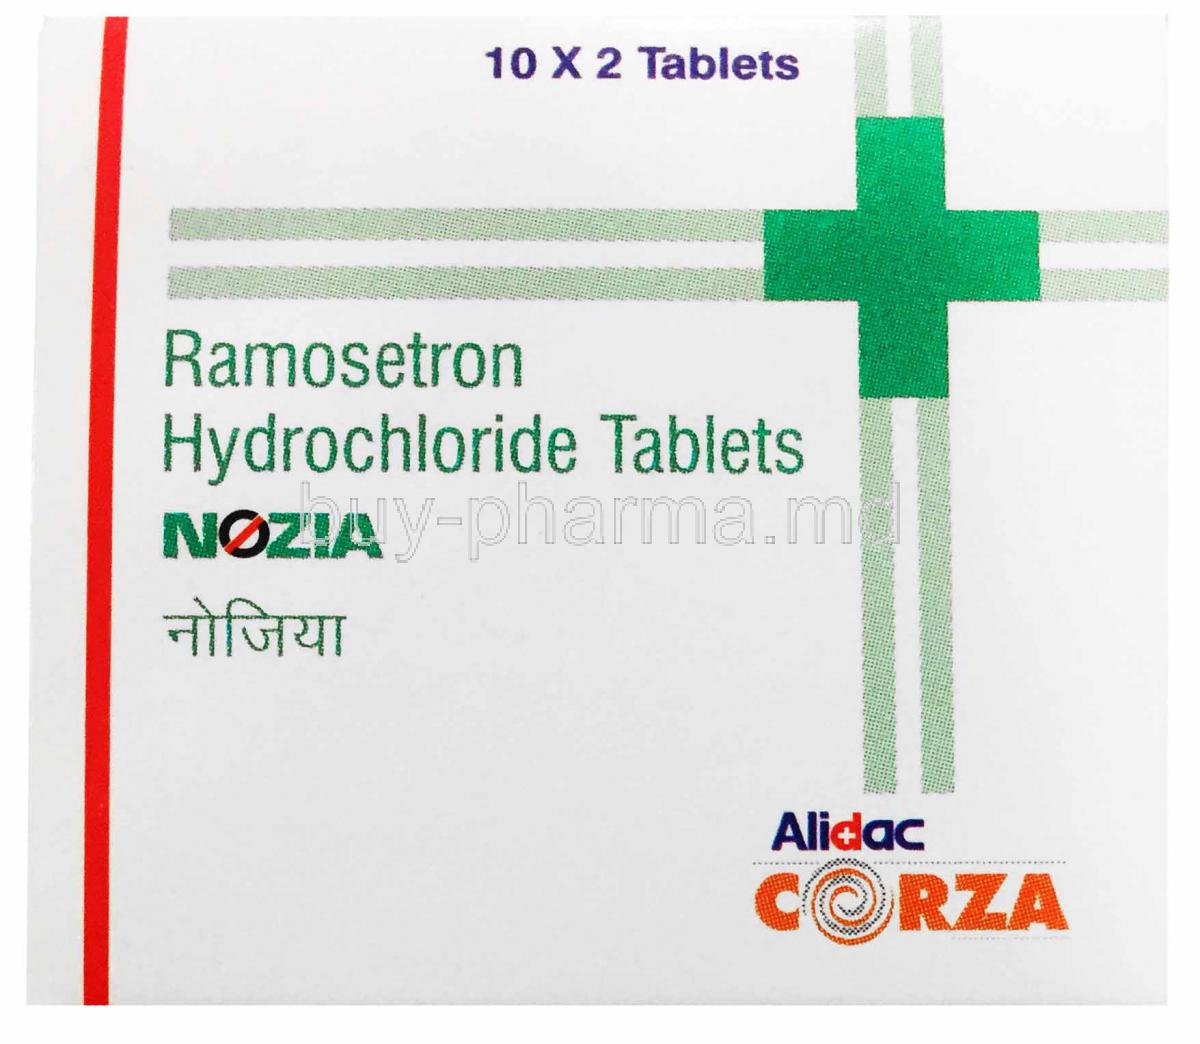 Generic Ibset, Ramosetron hydrochloride tablets, 10x 2 tabs. Alidac Corza. Box front presentation